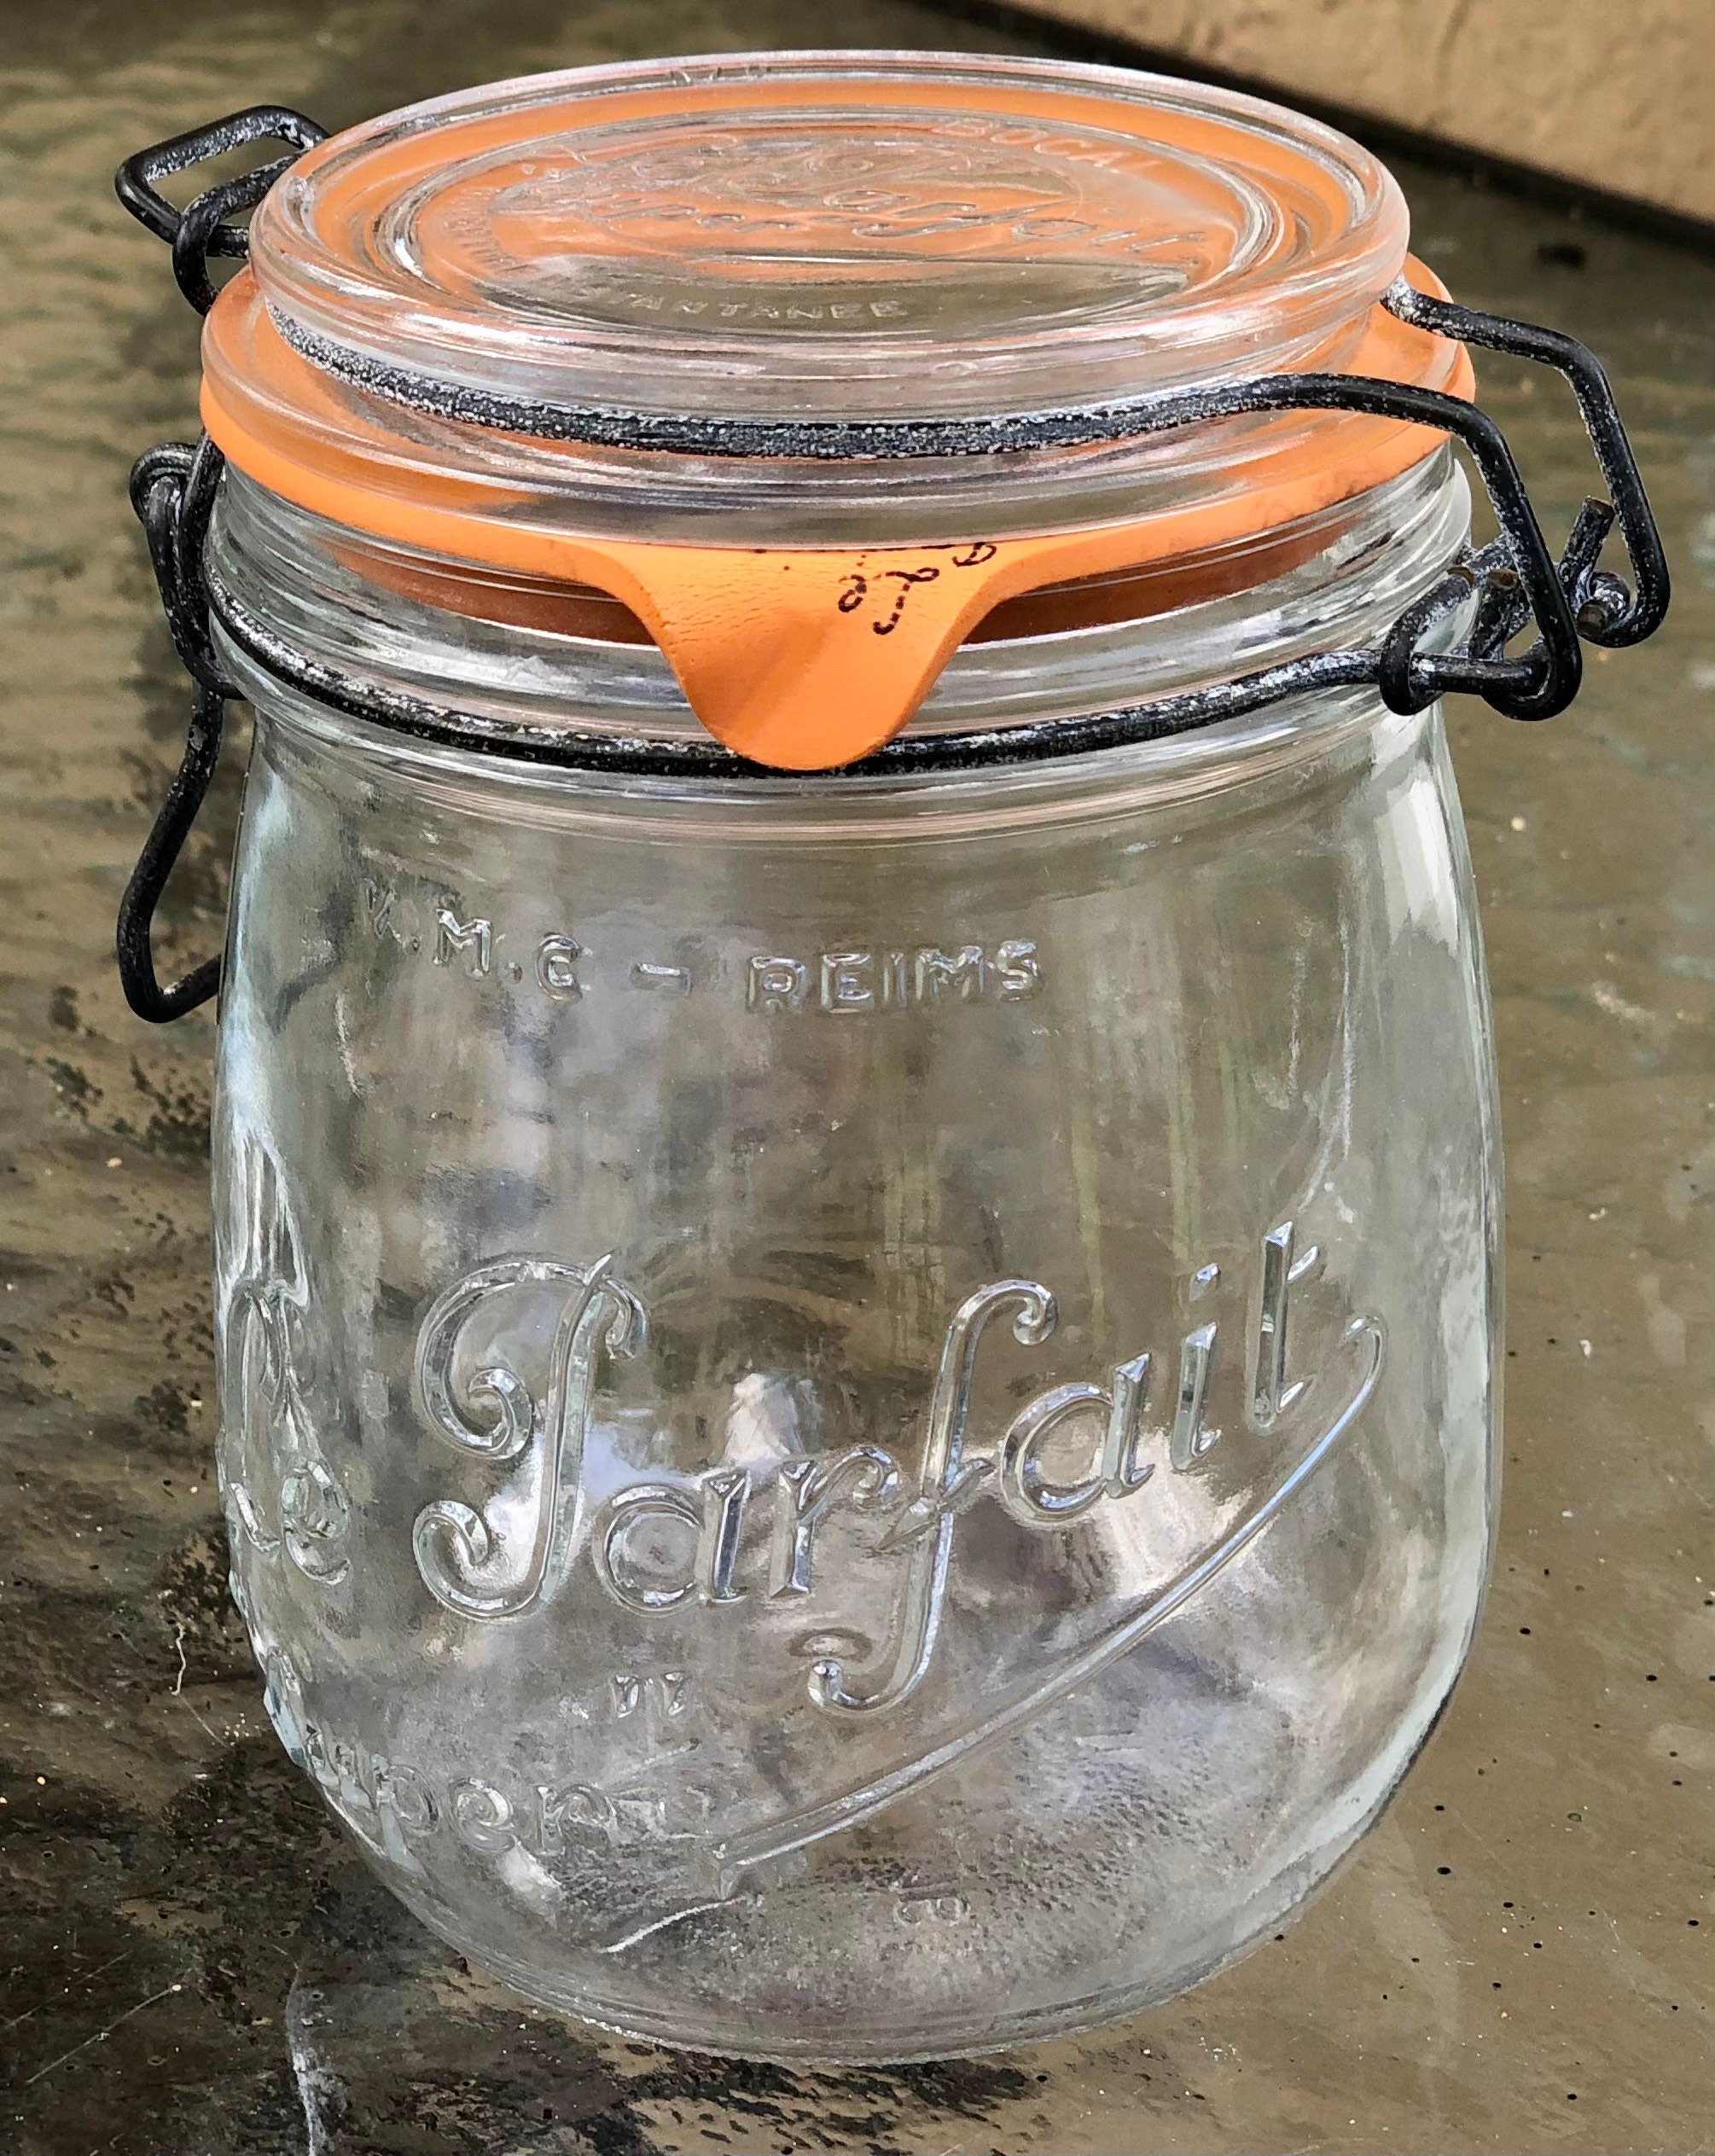 La Parfait Large, 3 liter, Storage Jar w/rubber gasket